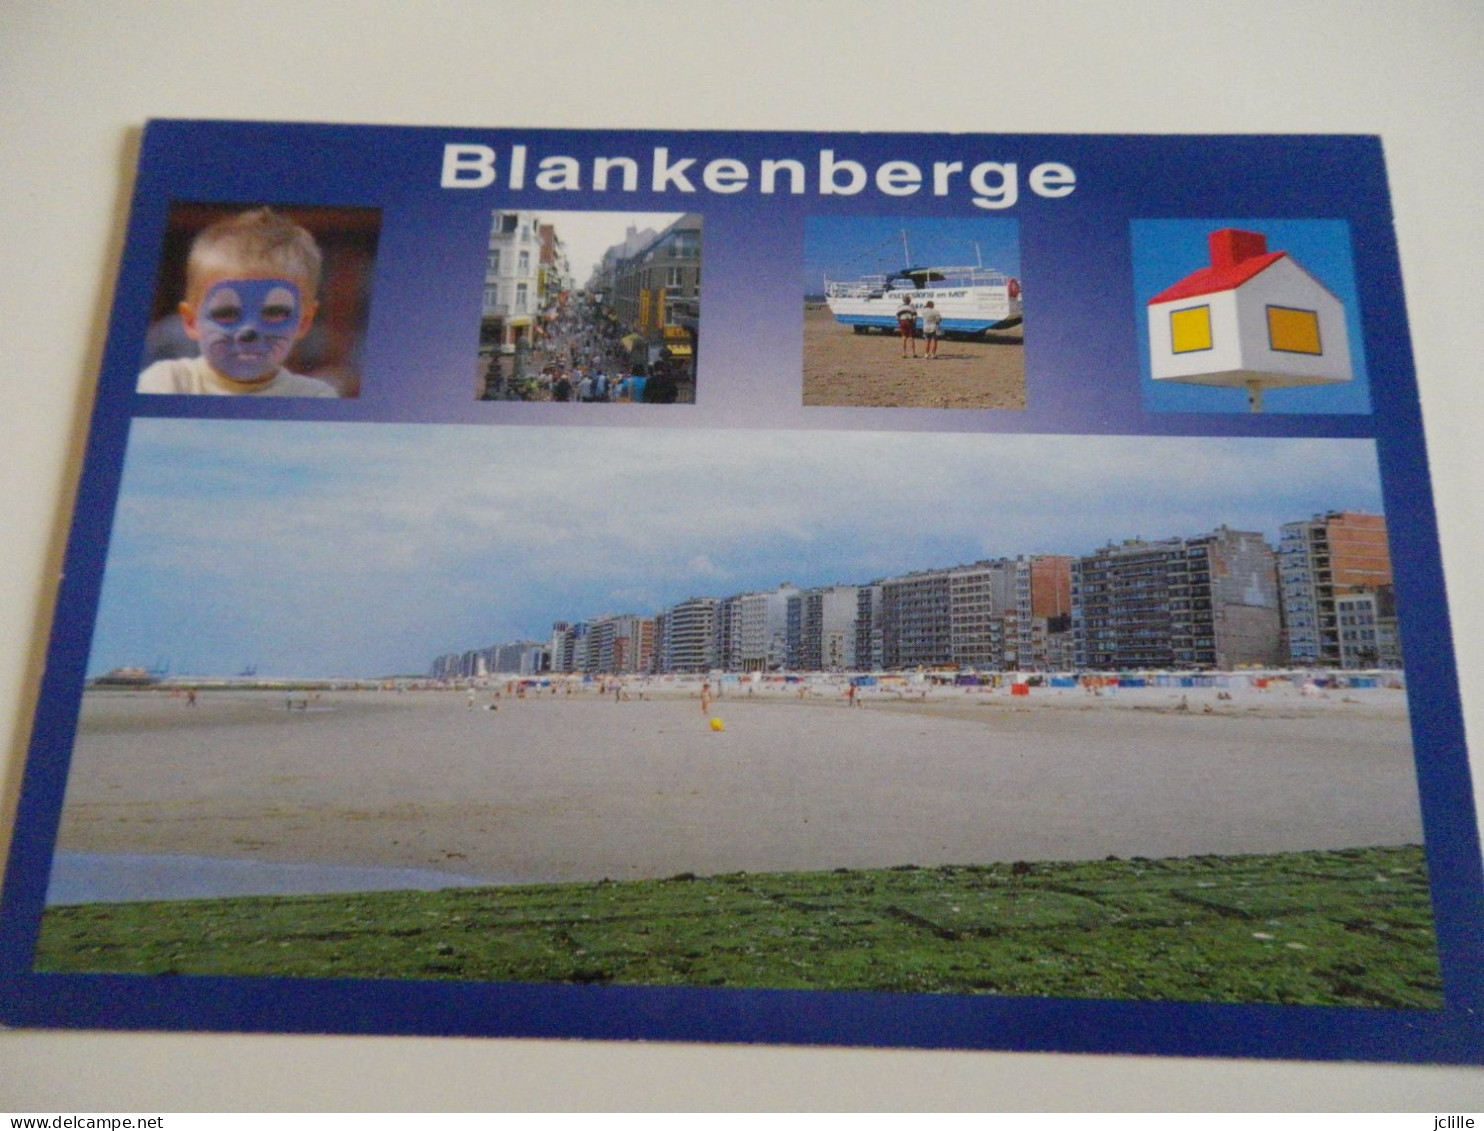 Lot de 10 cp cpa cpm  - BLANKENBERGE - FLANDRE OCCIDENTALE - BELGIQUE